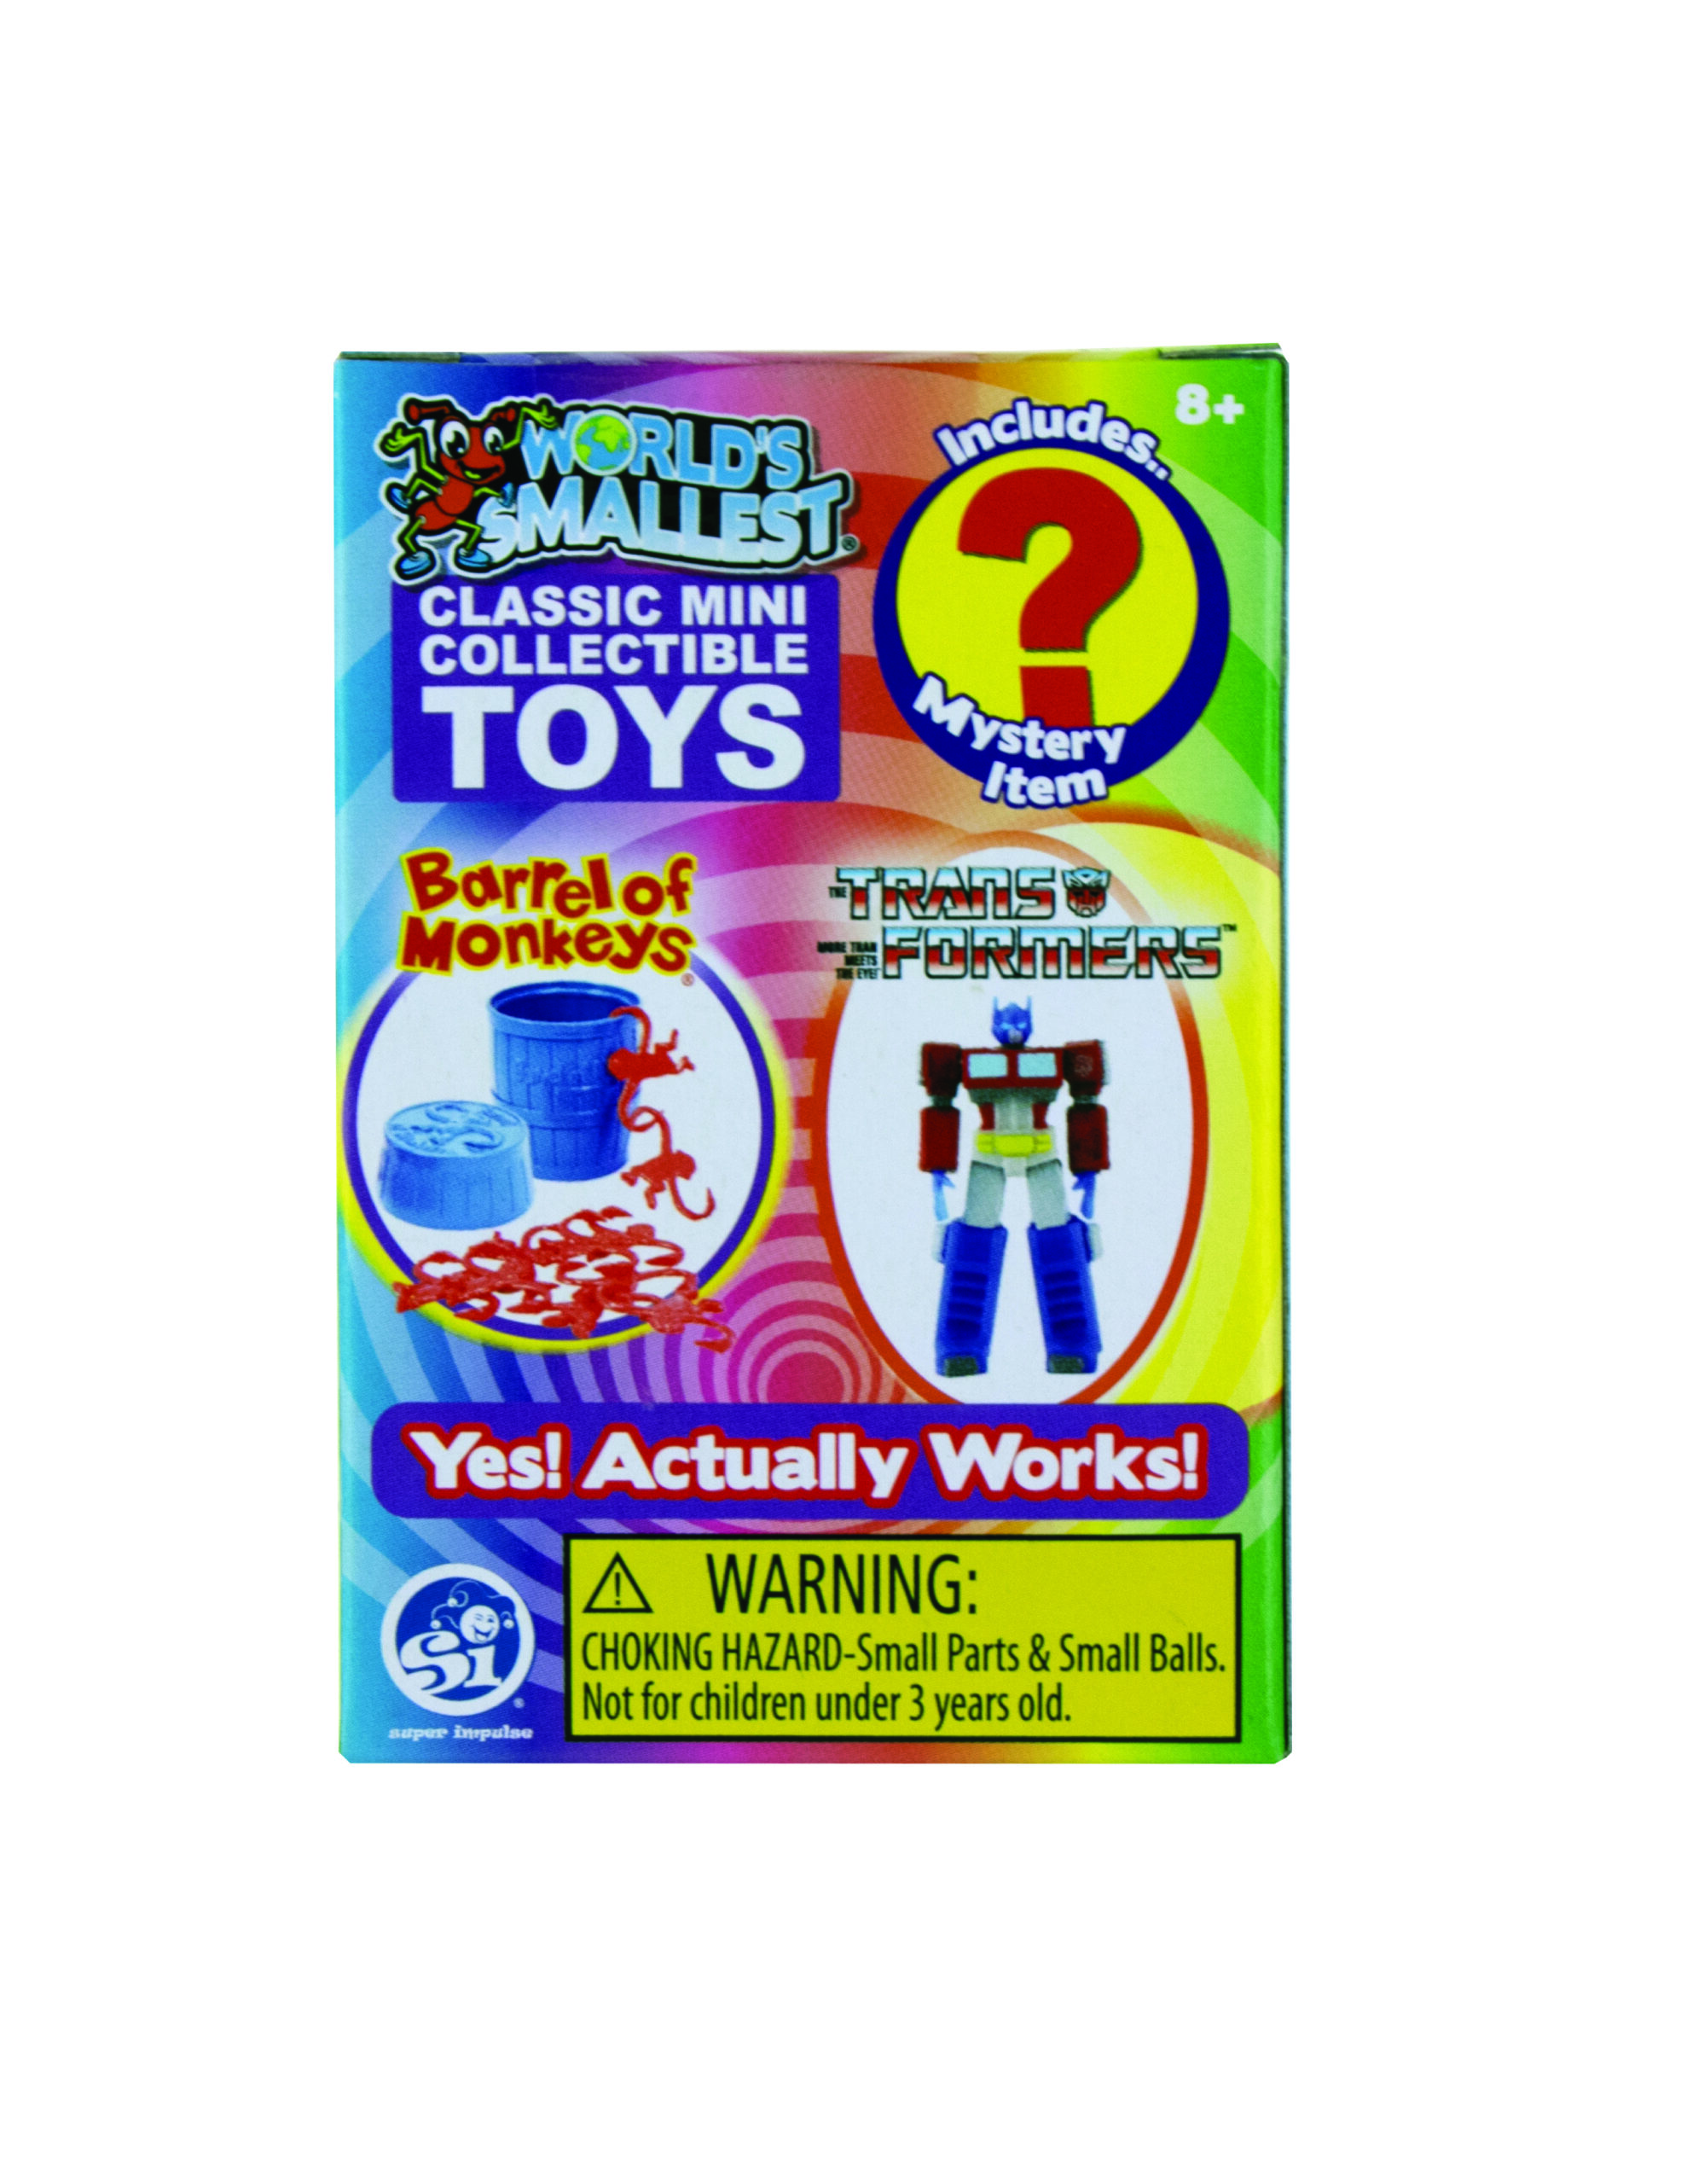 Super Impulse Worlds Smallest Classic Novelty Toy Blindbox Series 3